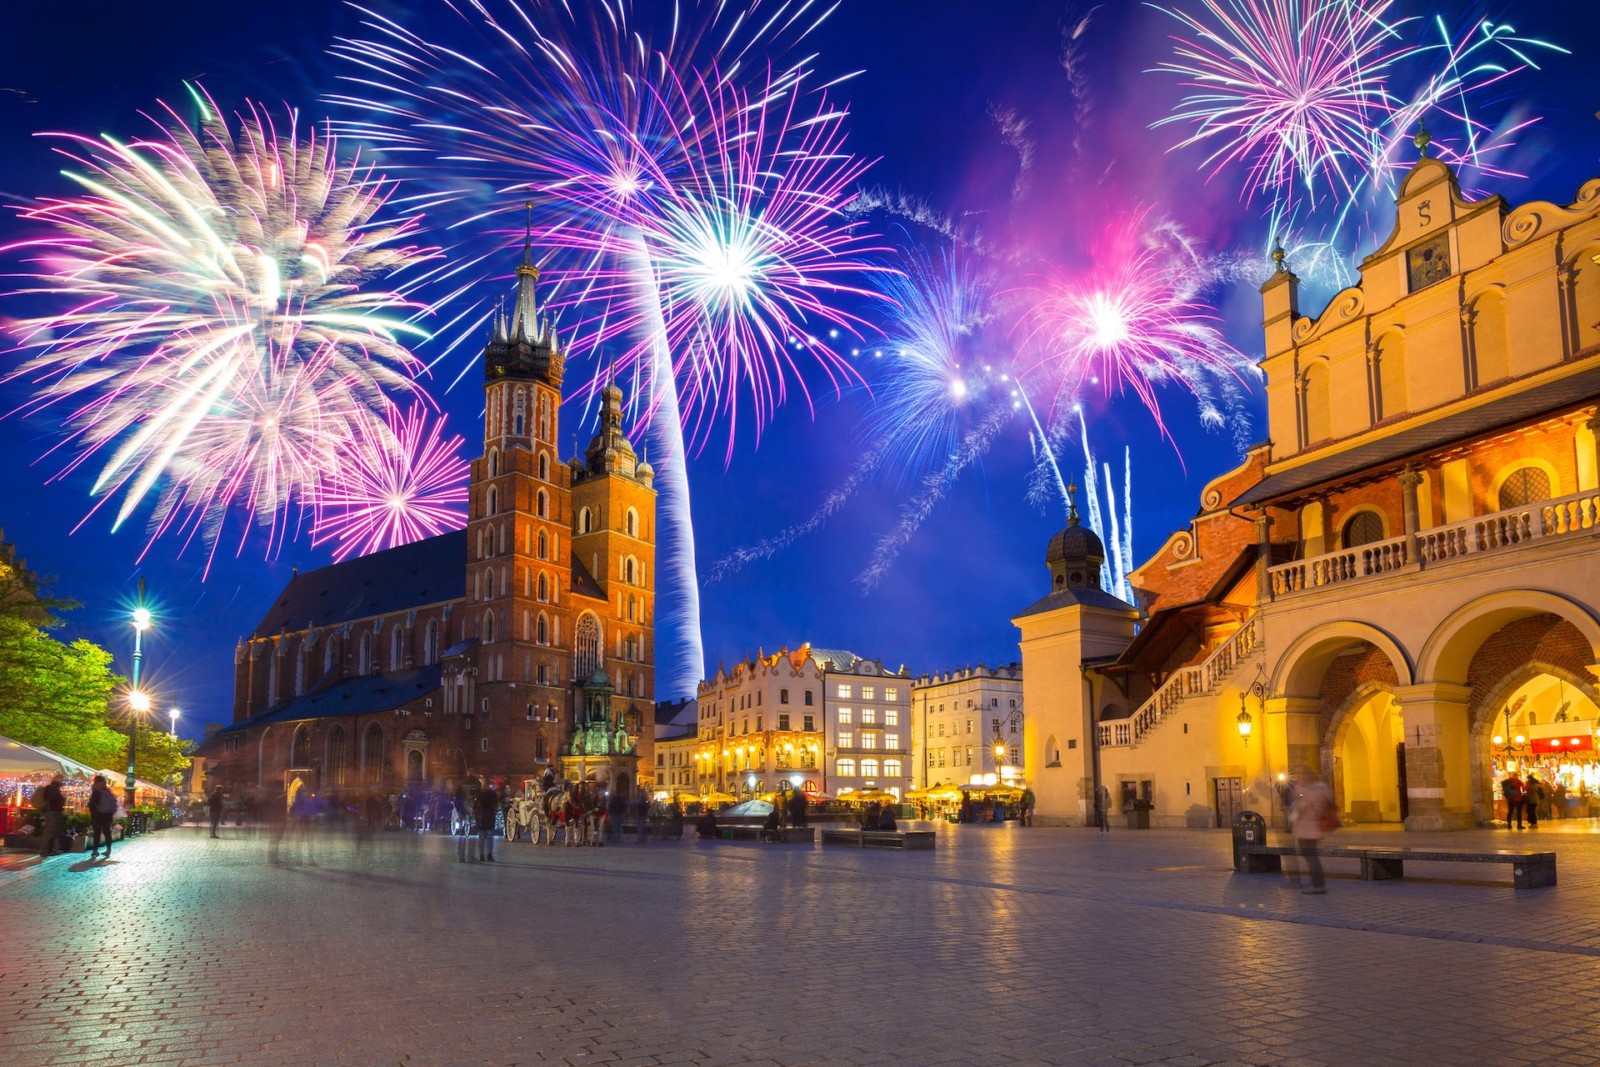 New Years firework display in Krakow